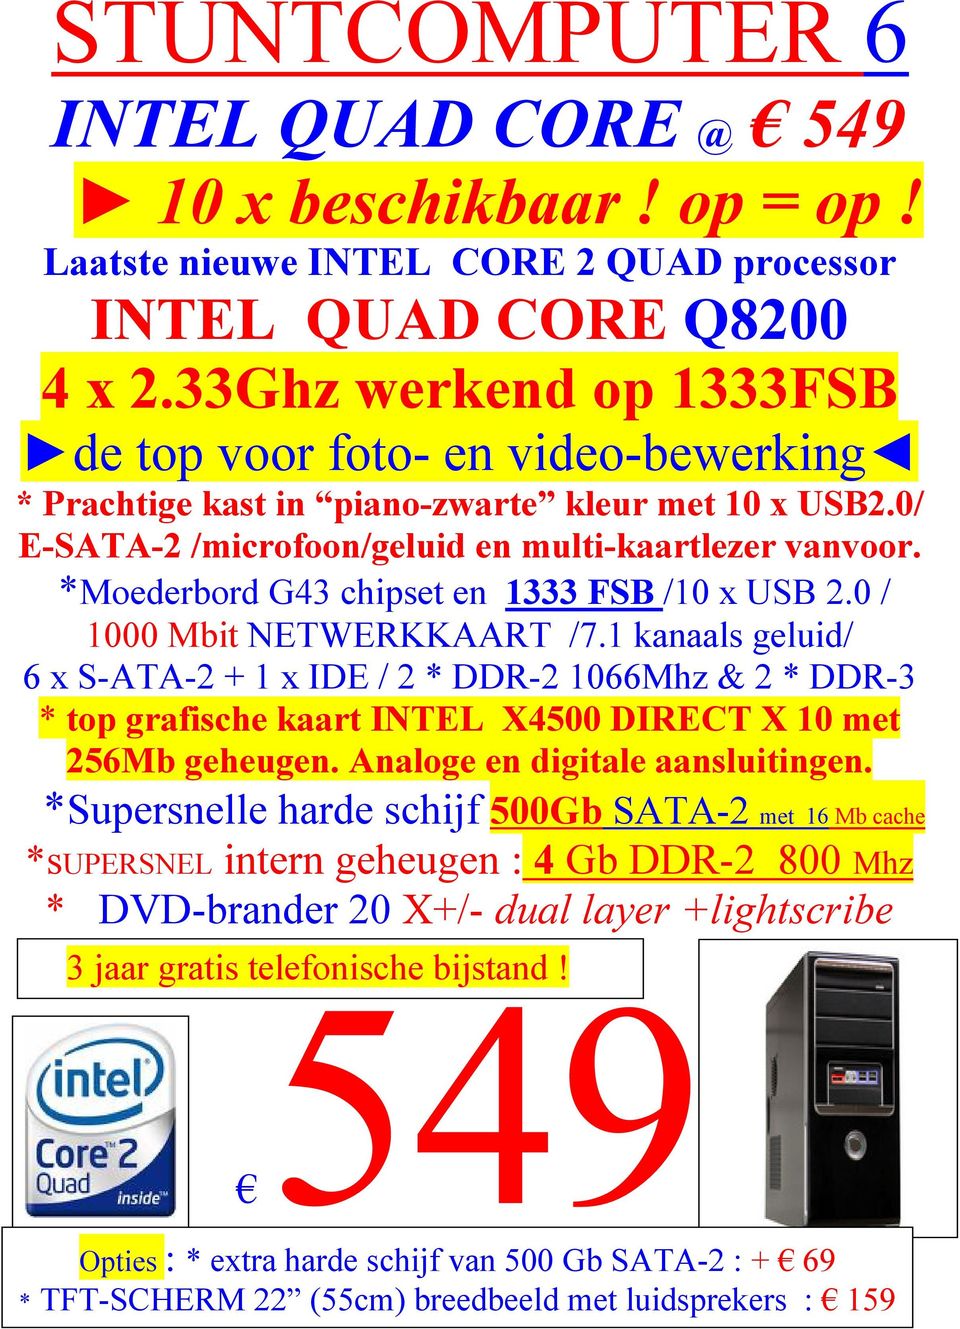 *Moederbord G43 chipset en 1333 FSB /10 x USB 2.0 / 1000 Mbit NETWERKKAART /7.